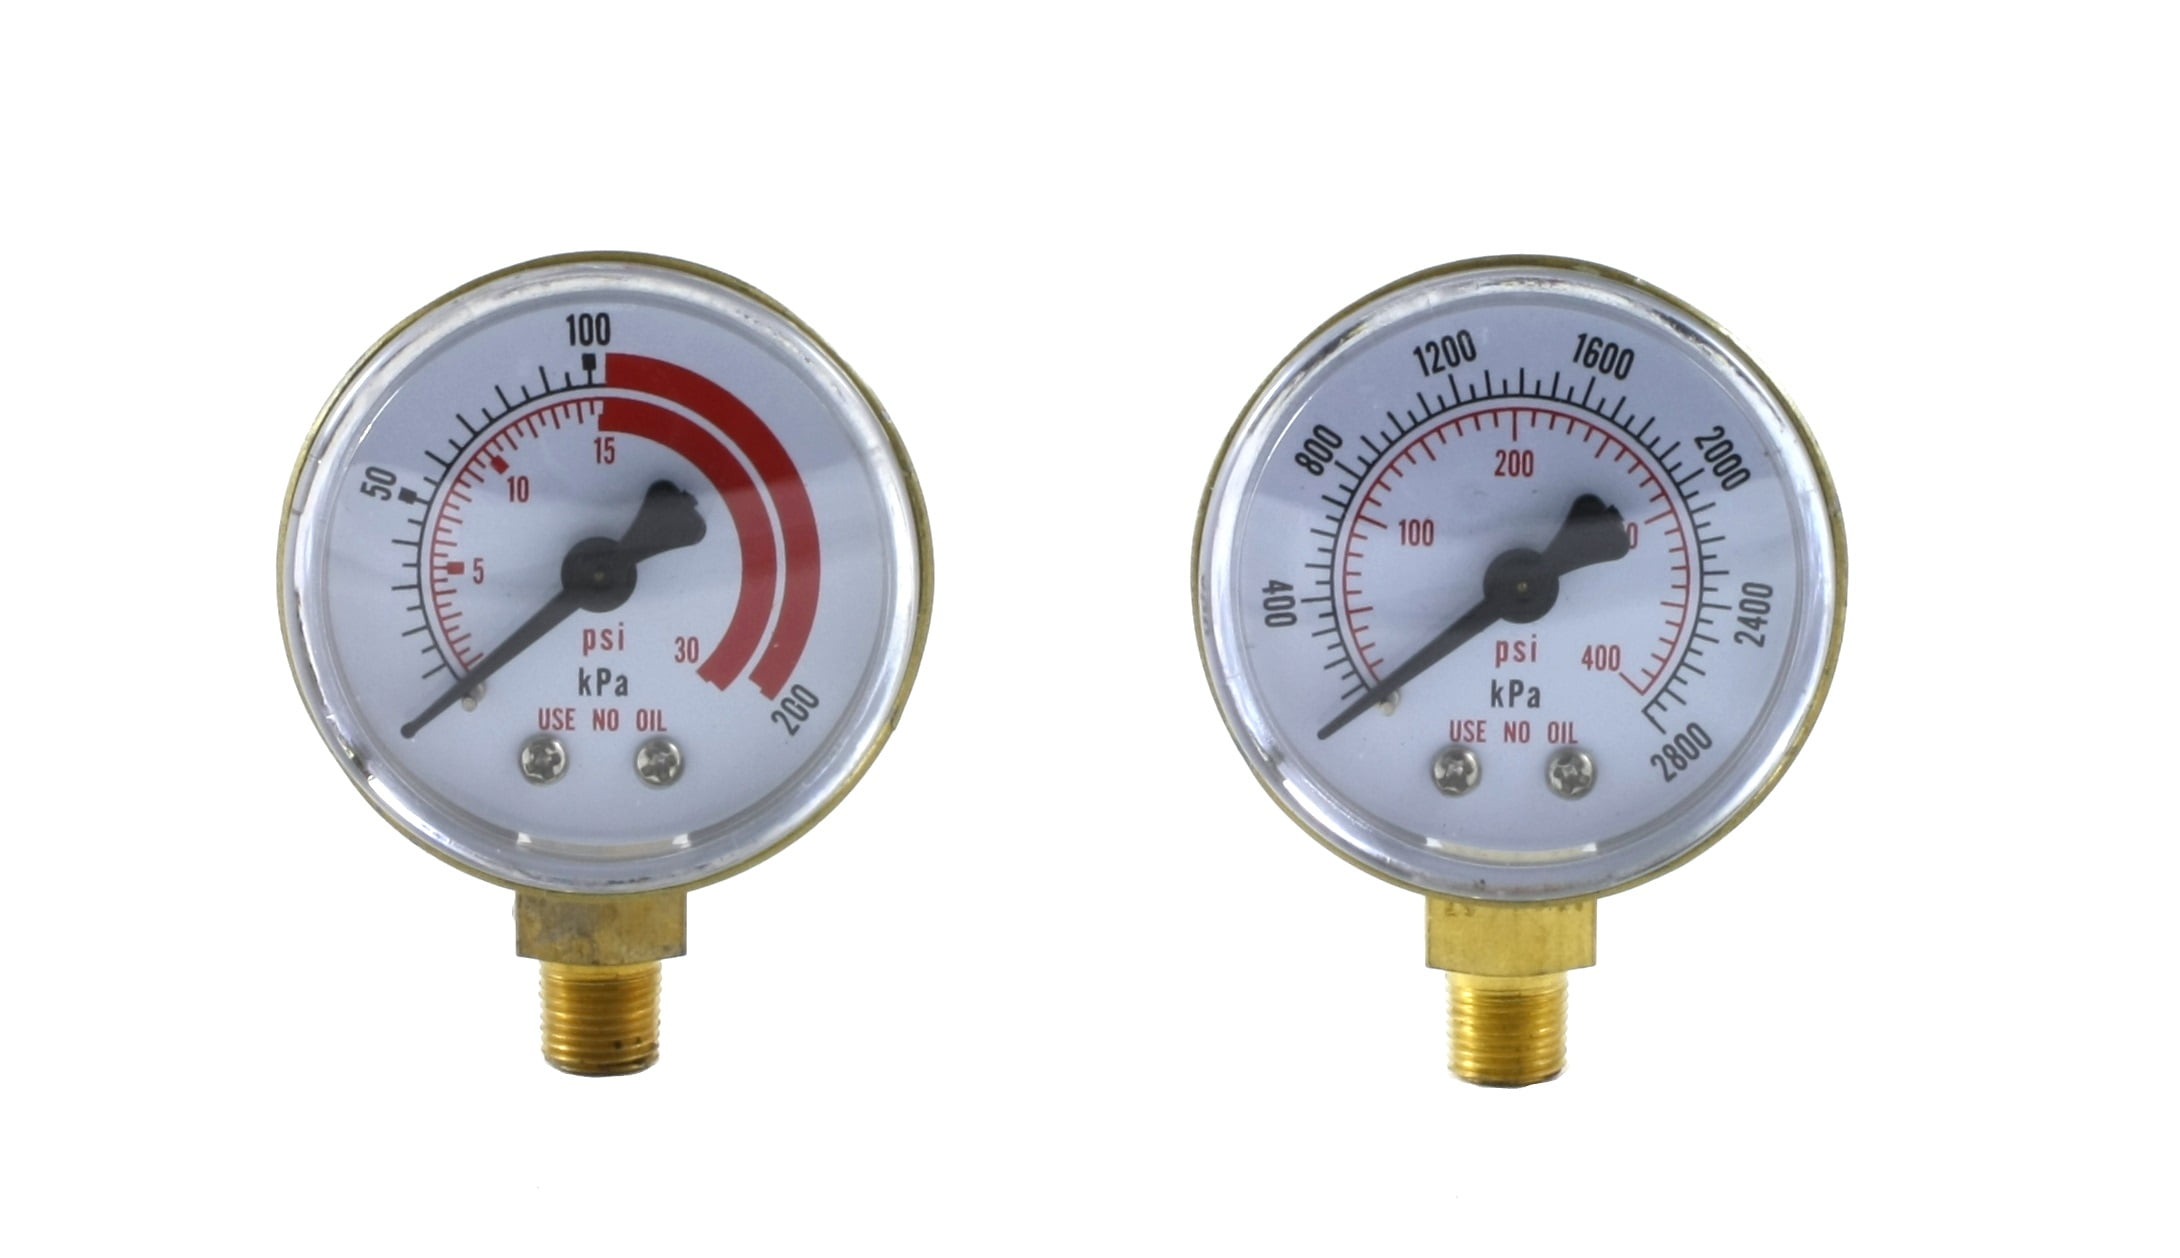 High Pressure Gauge for Acetylene Regulator 0-400 psi 2 inches 1/8" NPT Thread 